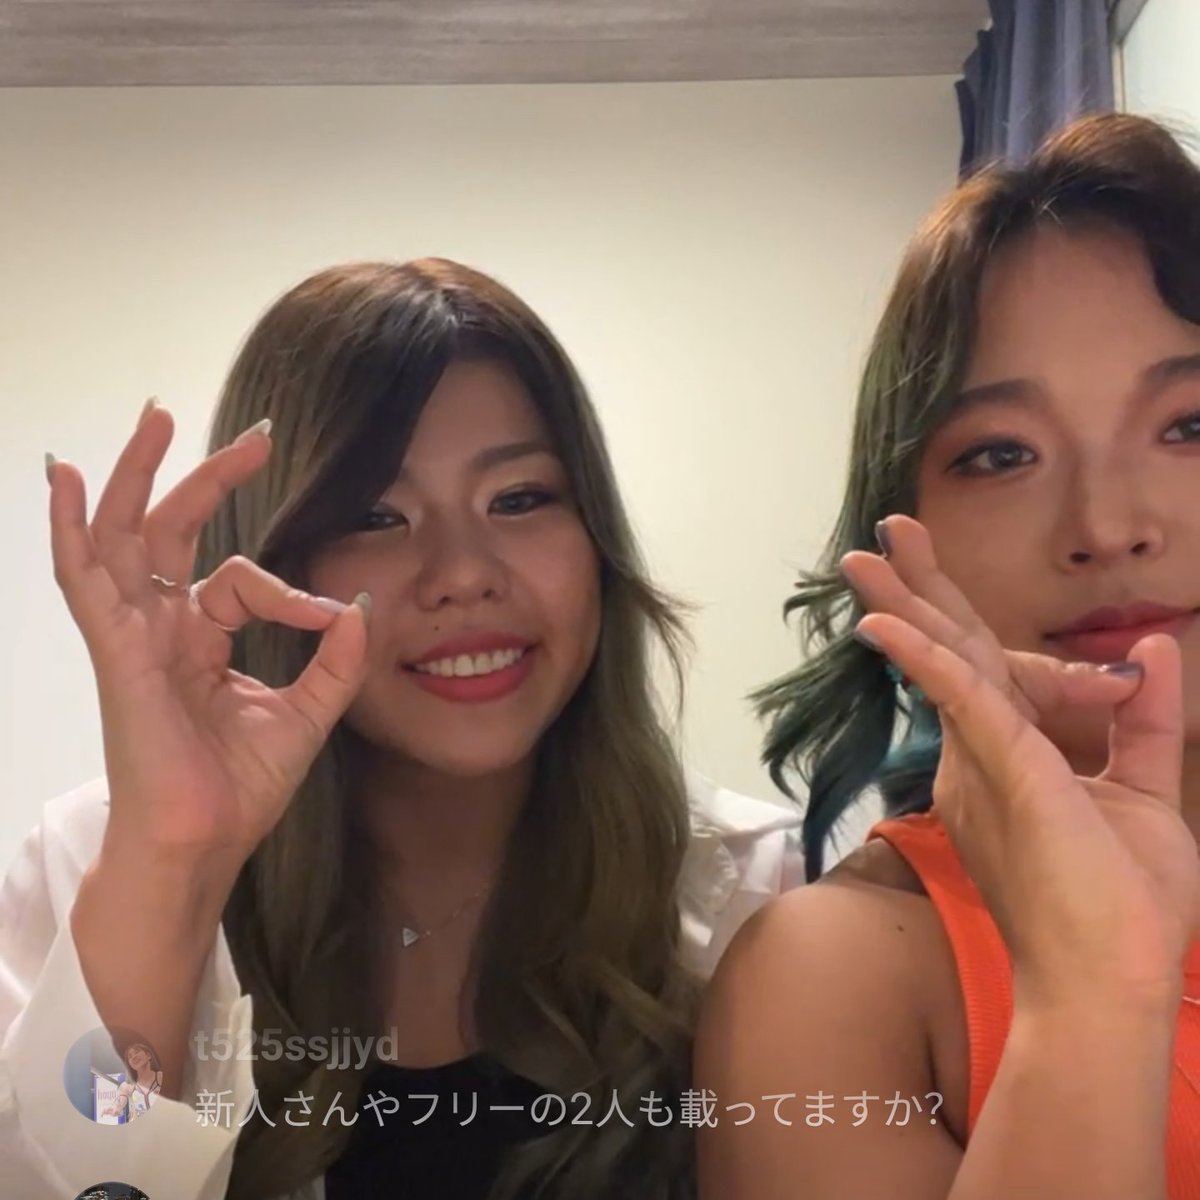 Hazuki and Saya Iida from ig live last night

#HAZUKI 
#葉月  
#飯田沙耶 
#STARS
#STARDOM